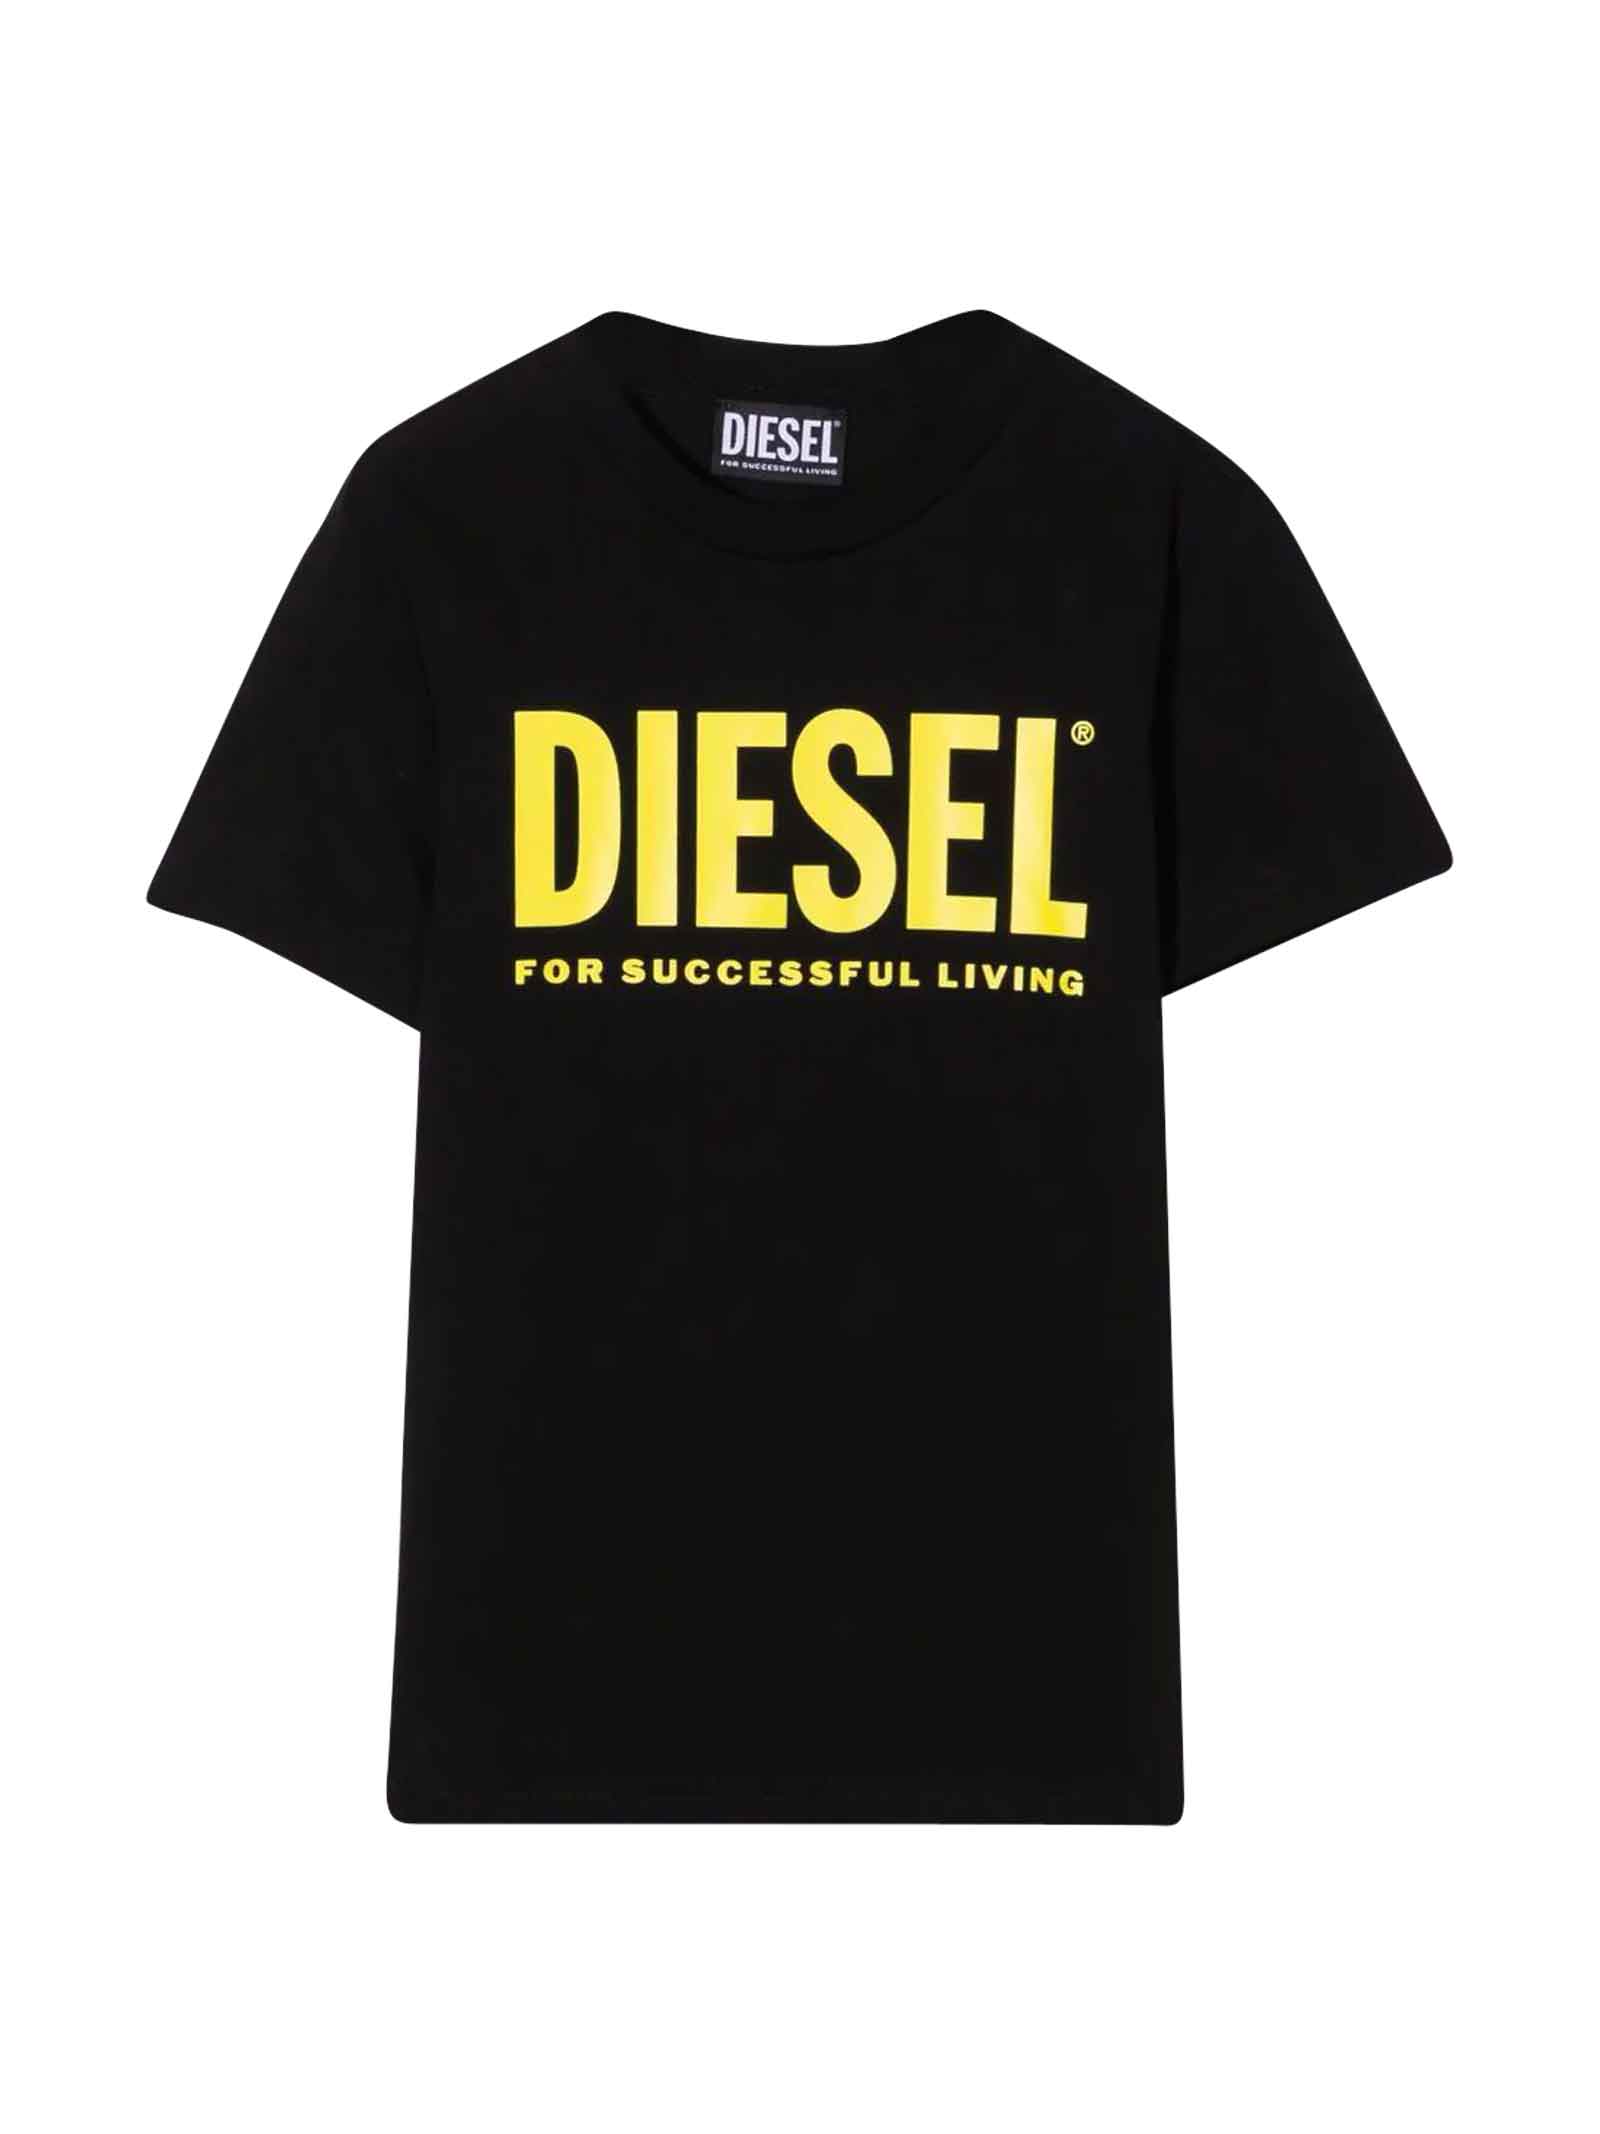 Diesel Black Unisex T-shirt